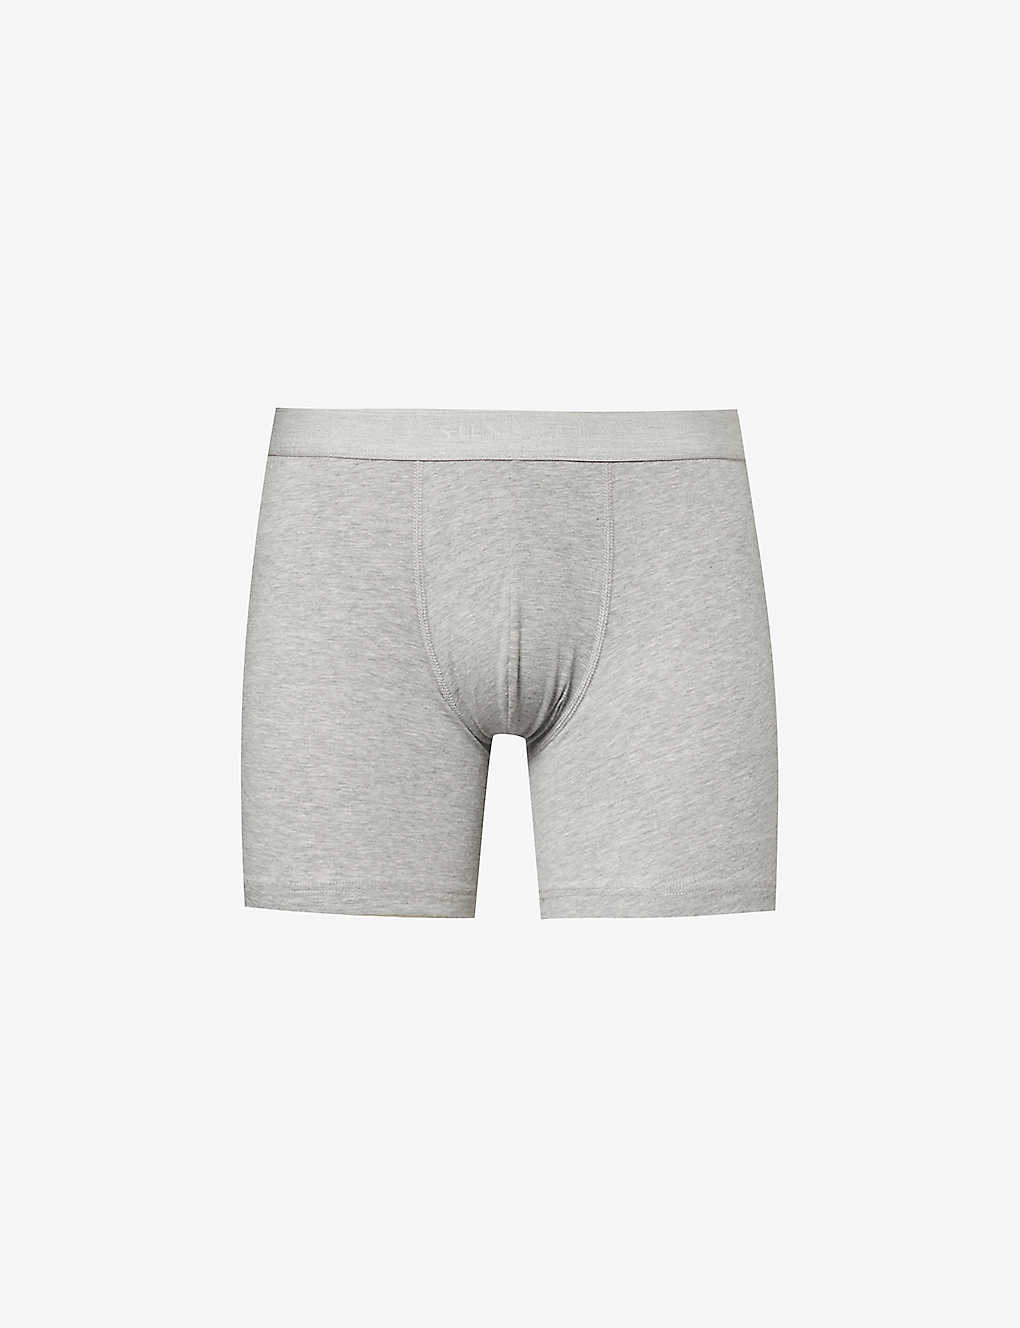 Sunspel Mens Grey Melange Elasticated-waistband Stretch-cotton Trunks